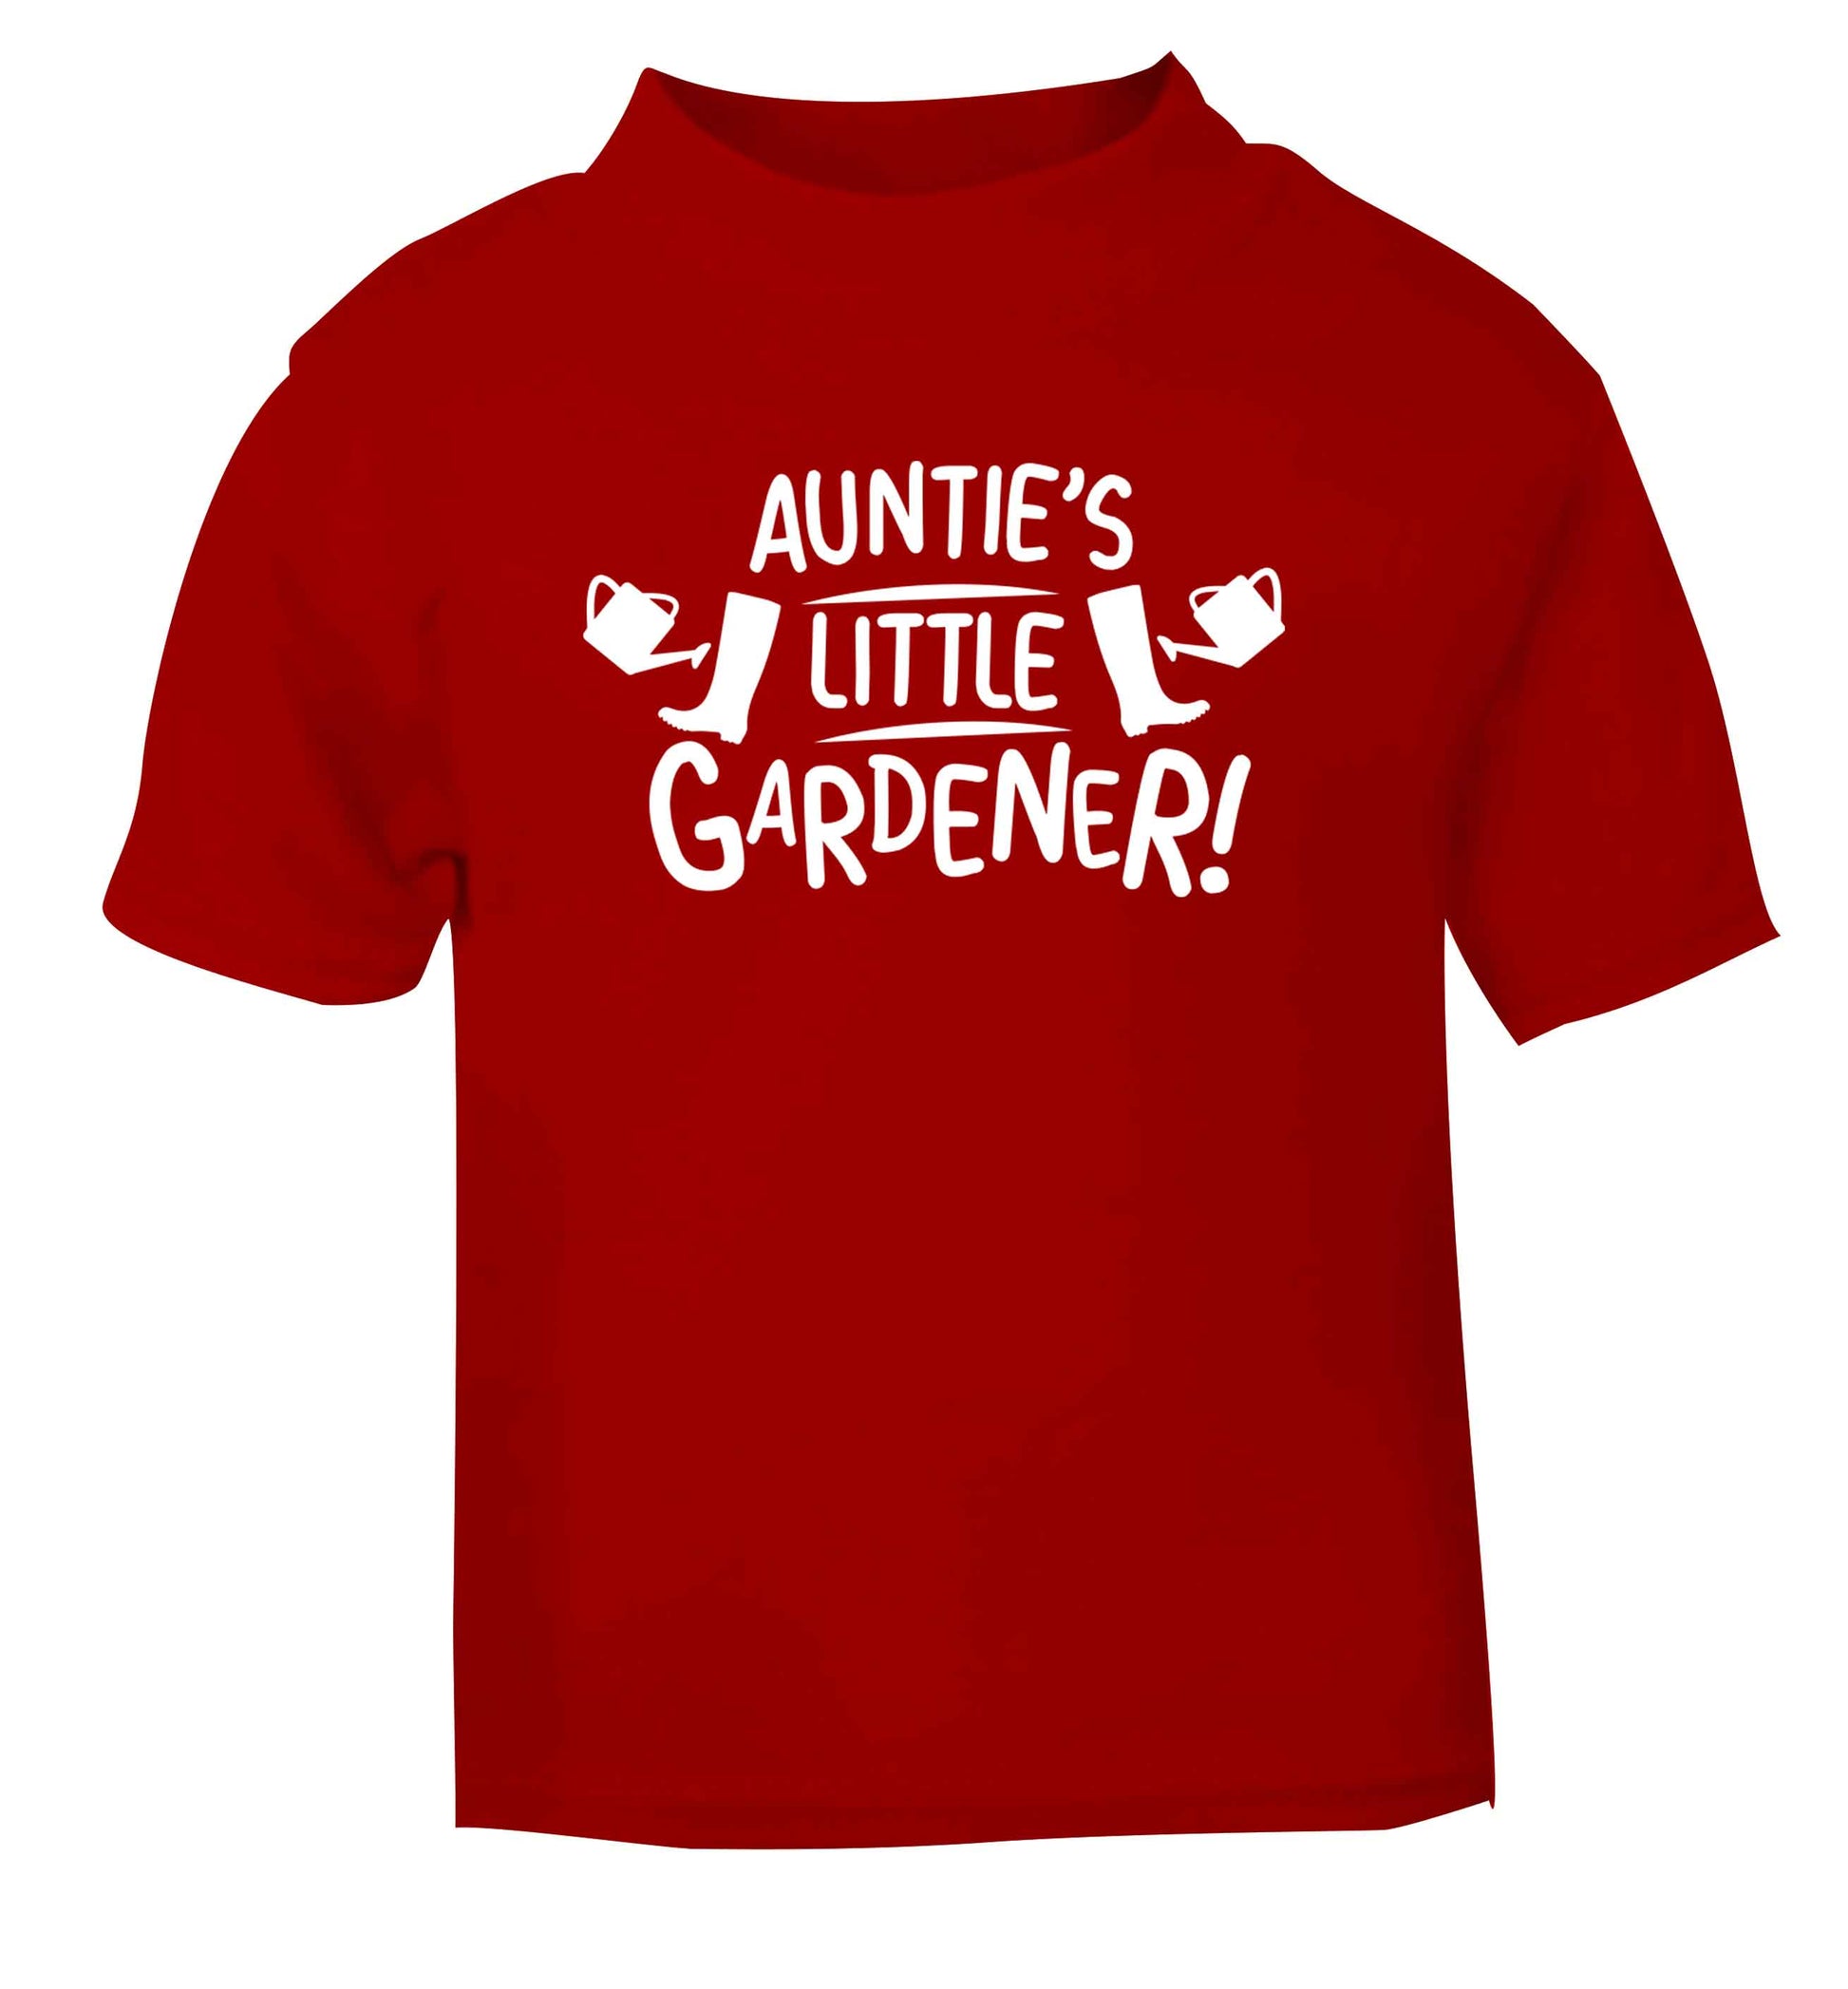 Auntie's little gardener red Baby Toddler Tshirt 2 Years